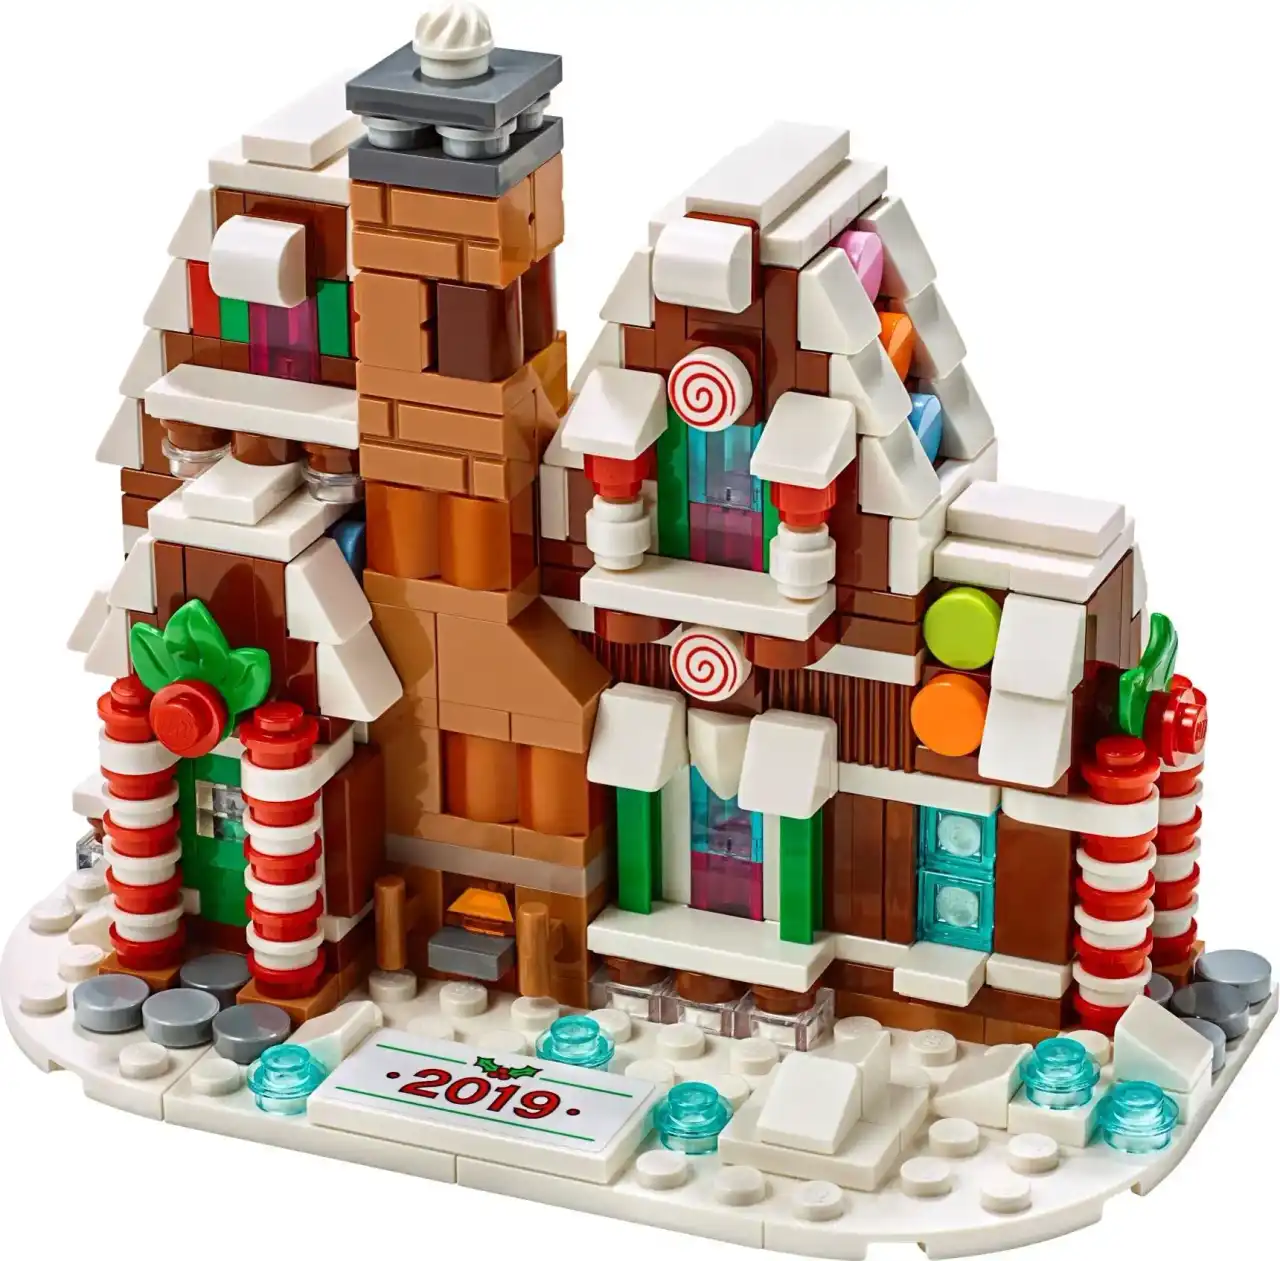 40337 - Microscale Gingerbread House